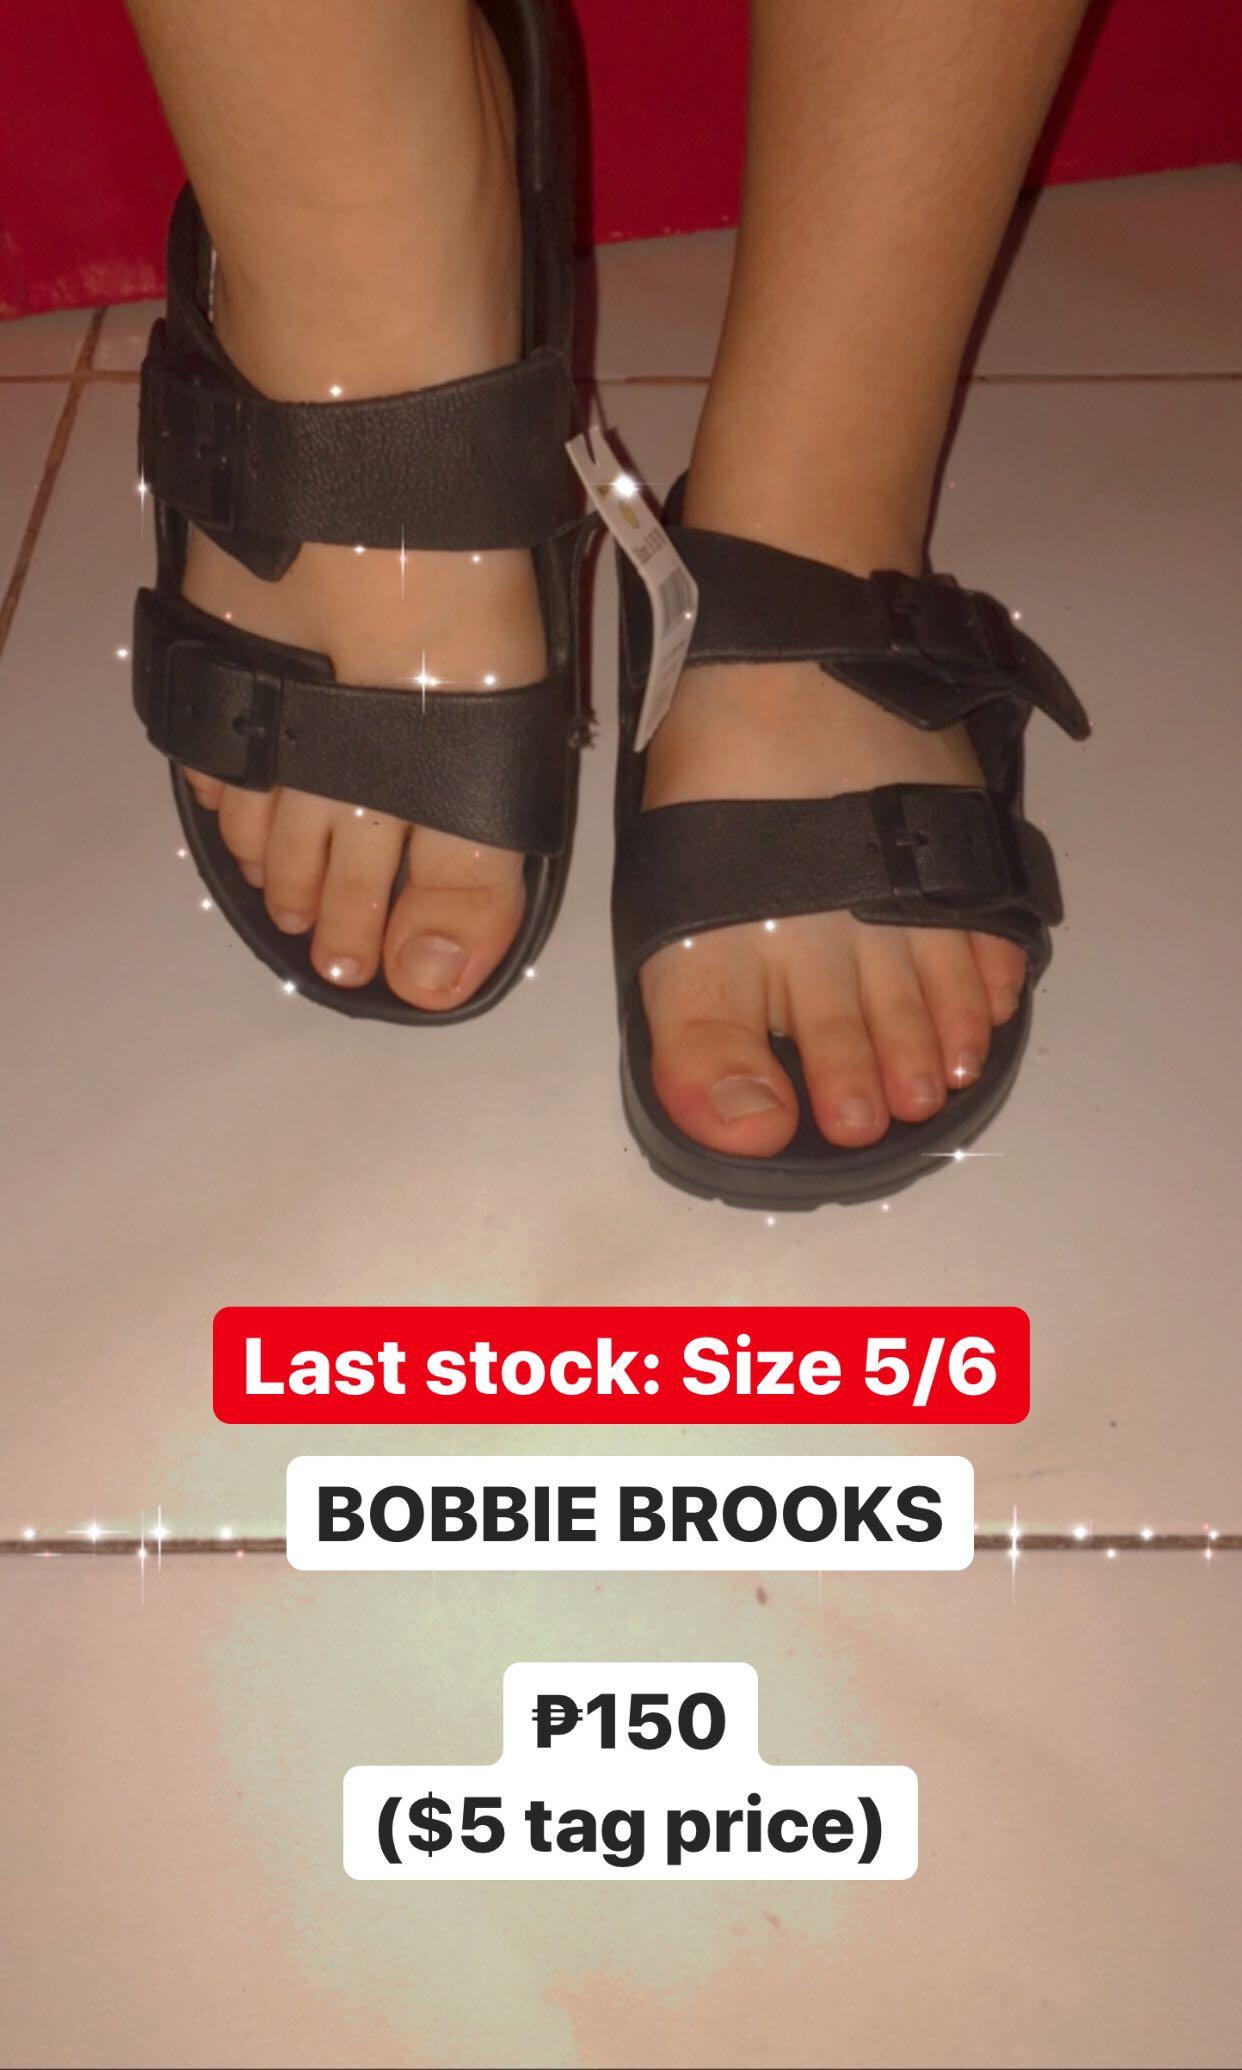 bobbie brooks slippers